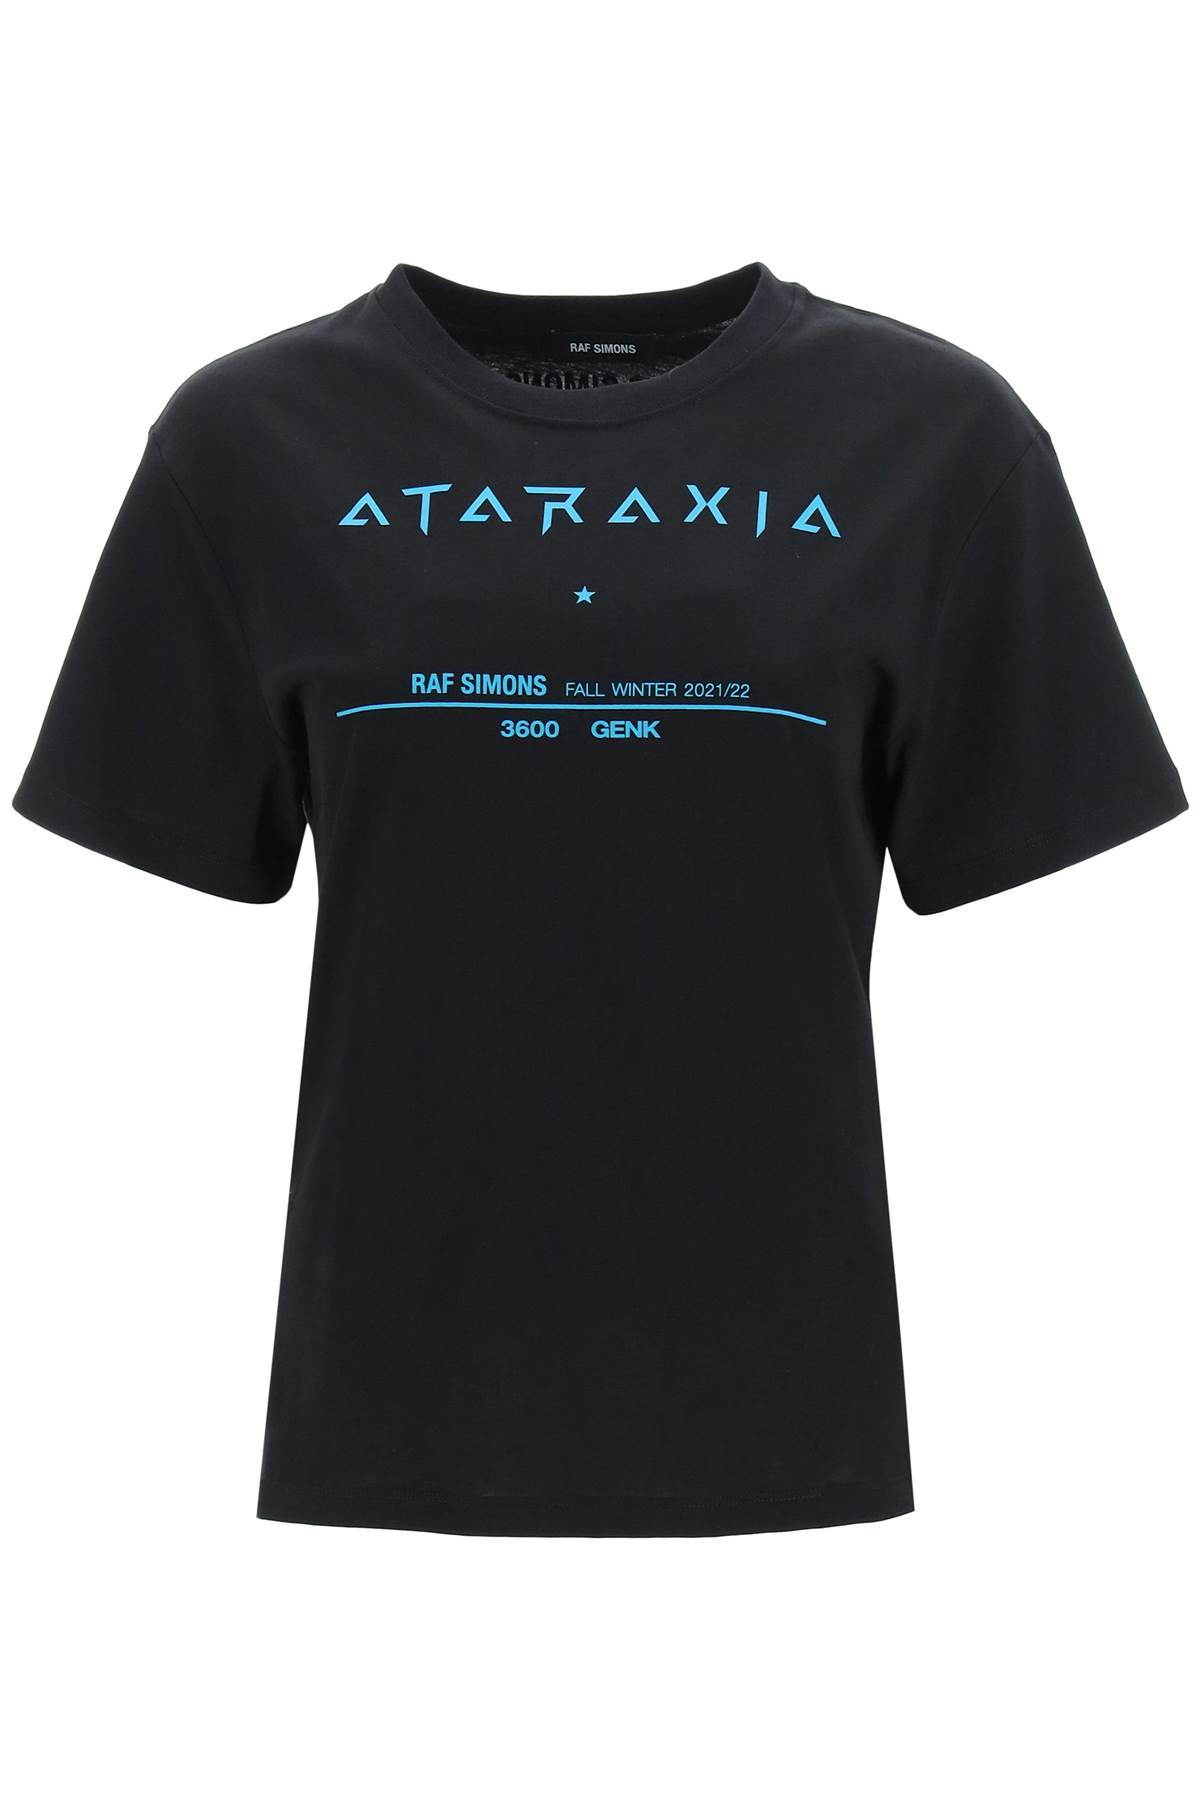 Raf Simons Ataraxia Tour T-shirt